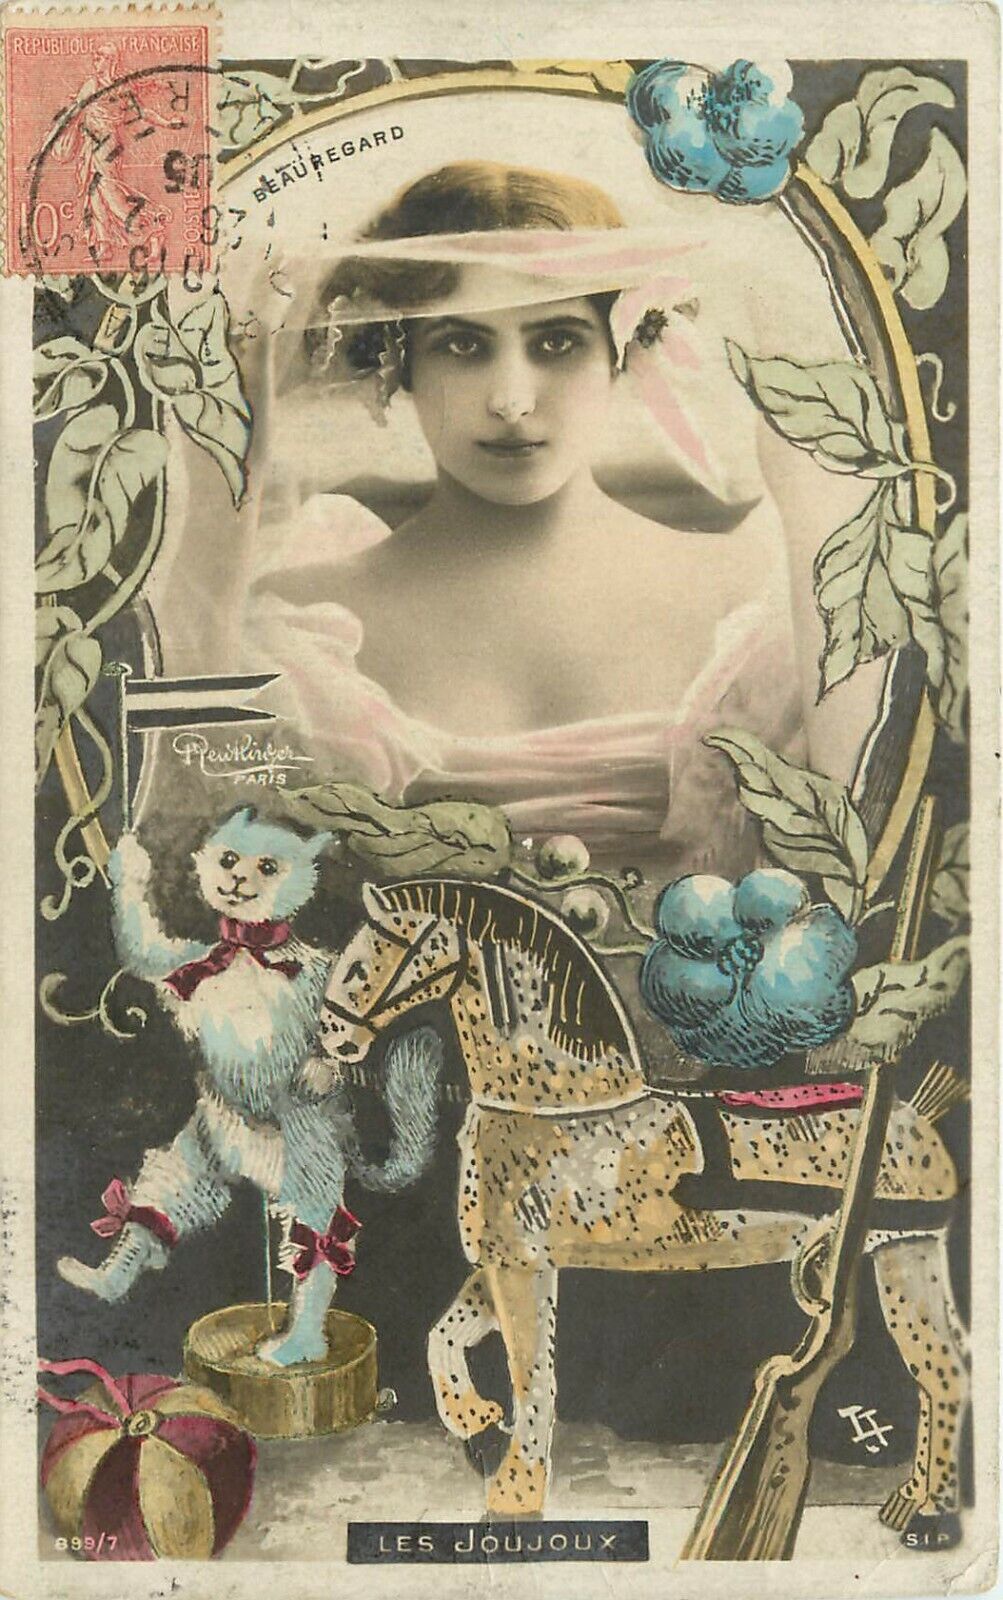 Reutlinger French Hand Colored RPPC 899/7 \'Les Joujoux\' Beautiful Woman, Toys